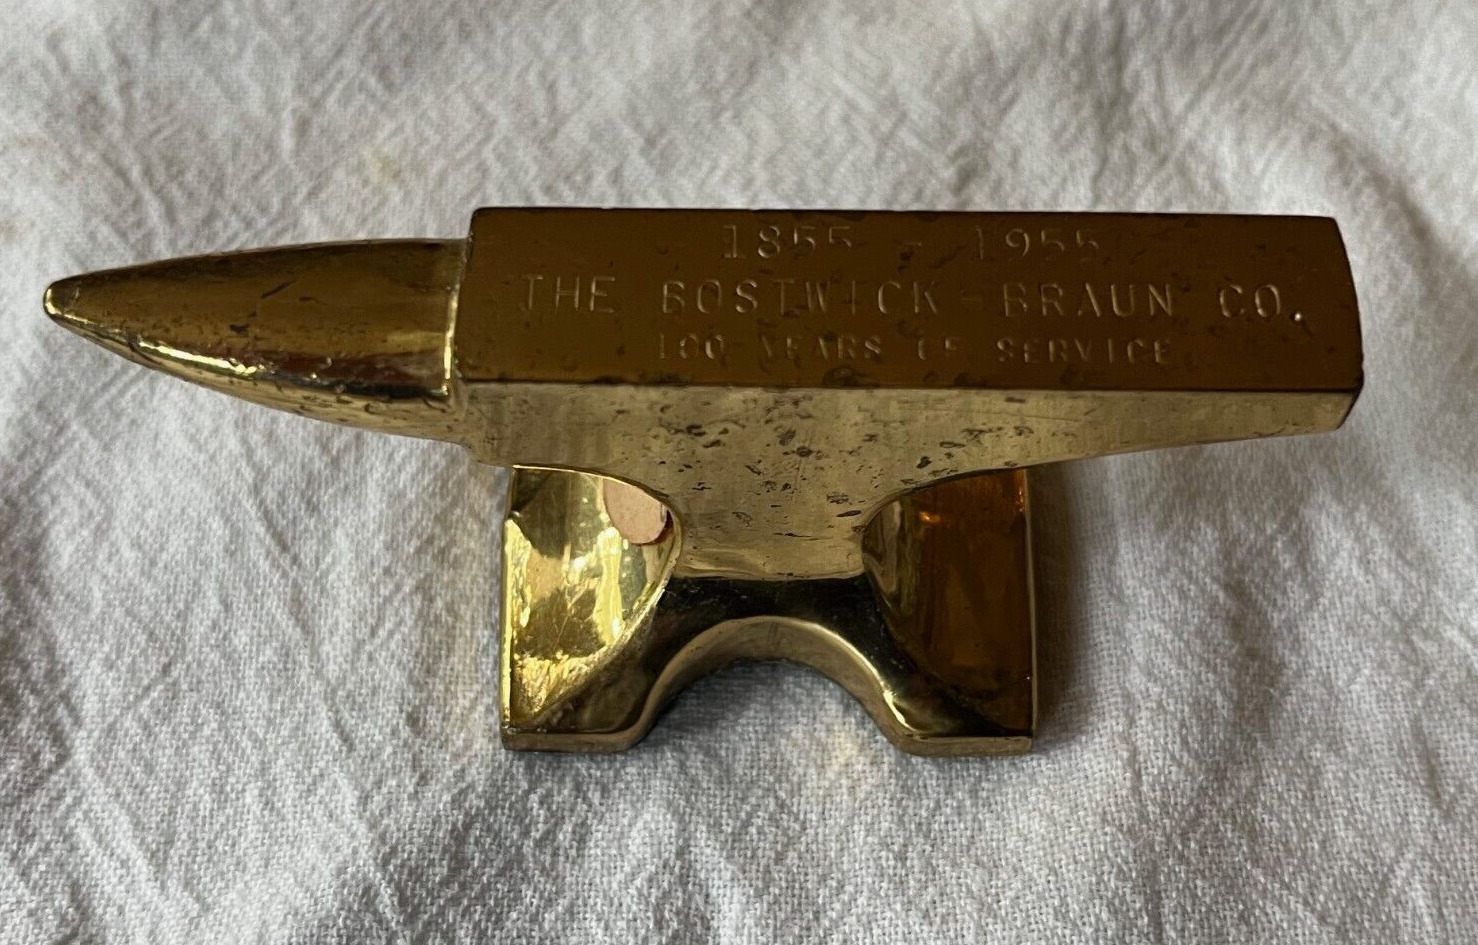 Bostwick Braun Brass Anvil 1955 Commemorative Paperweight Toledo Ohio